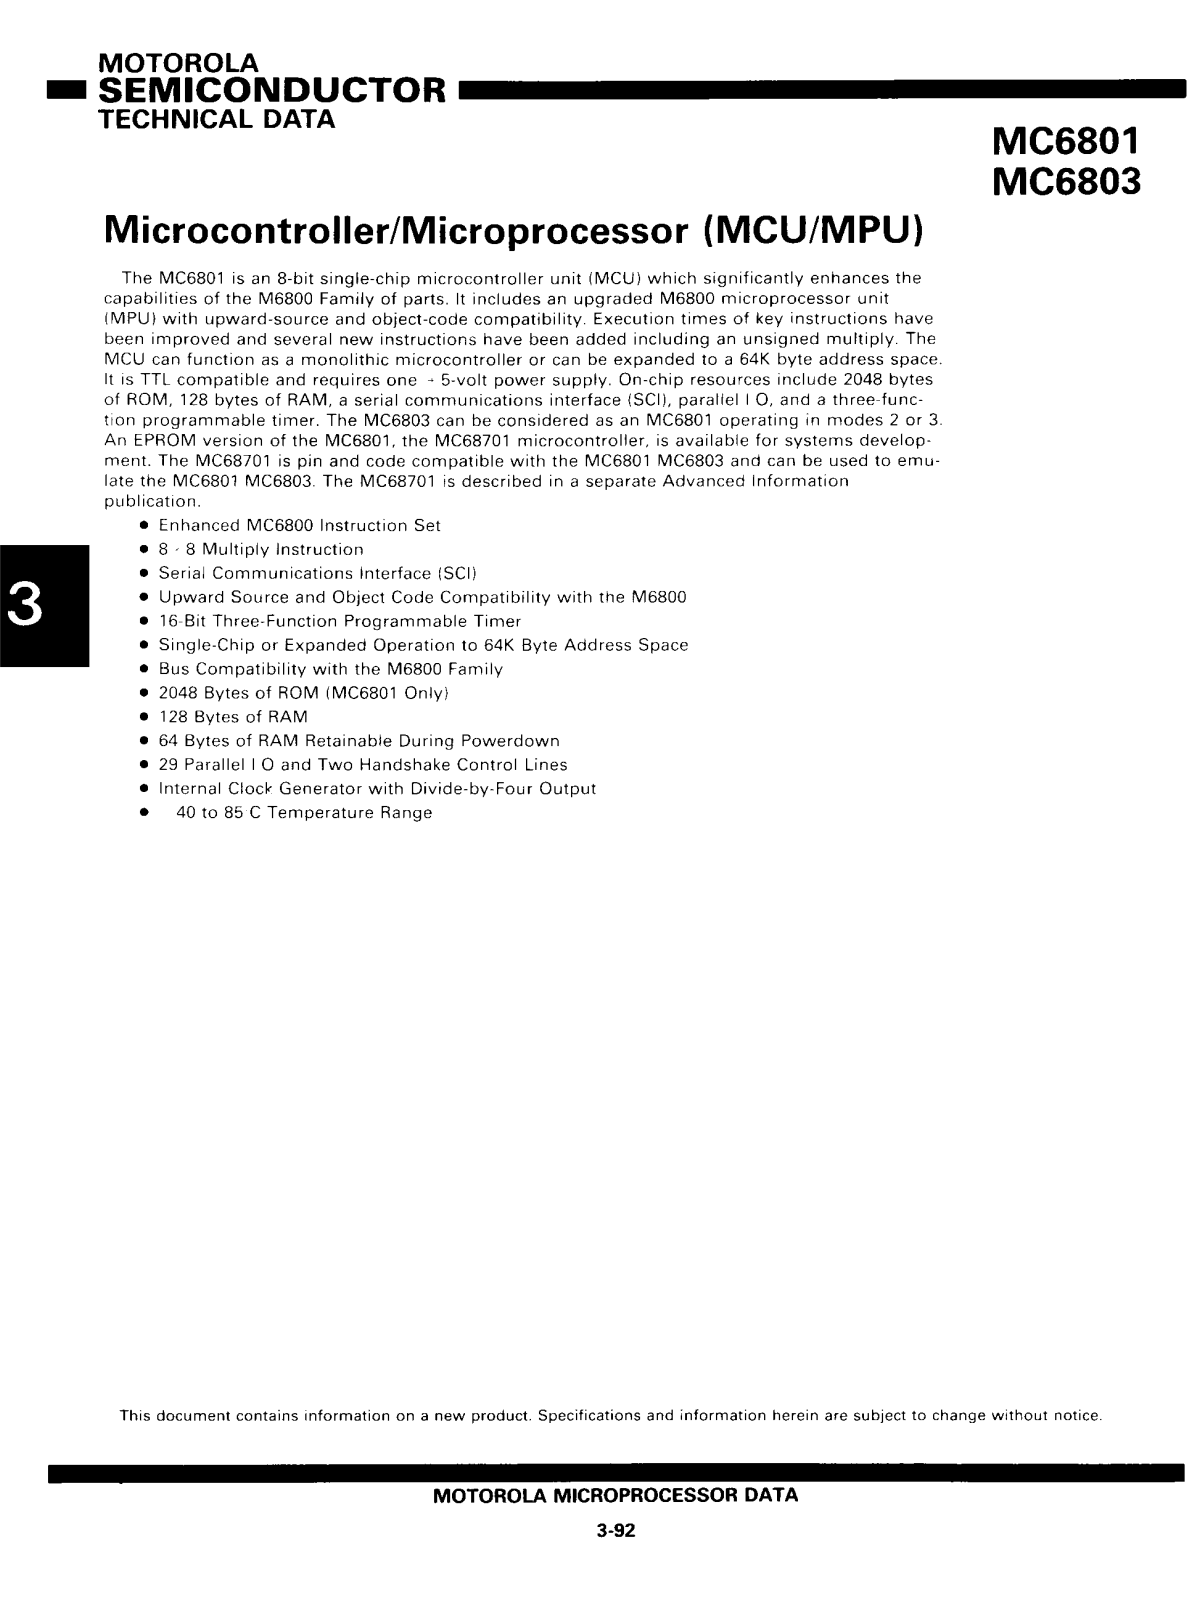 MOTOROLA MC6801, MC6803 Technical data